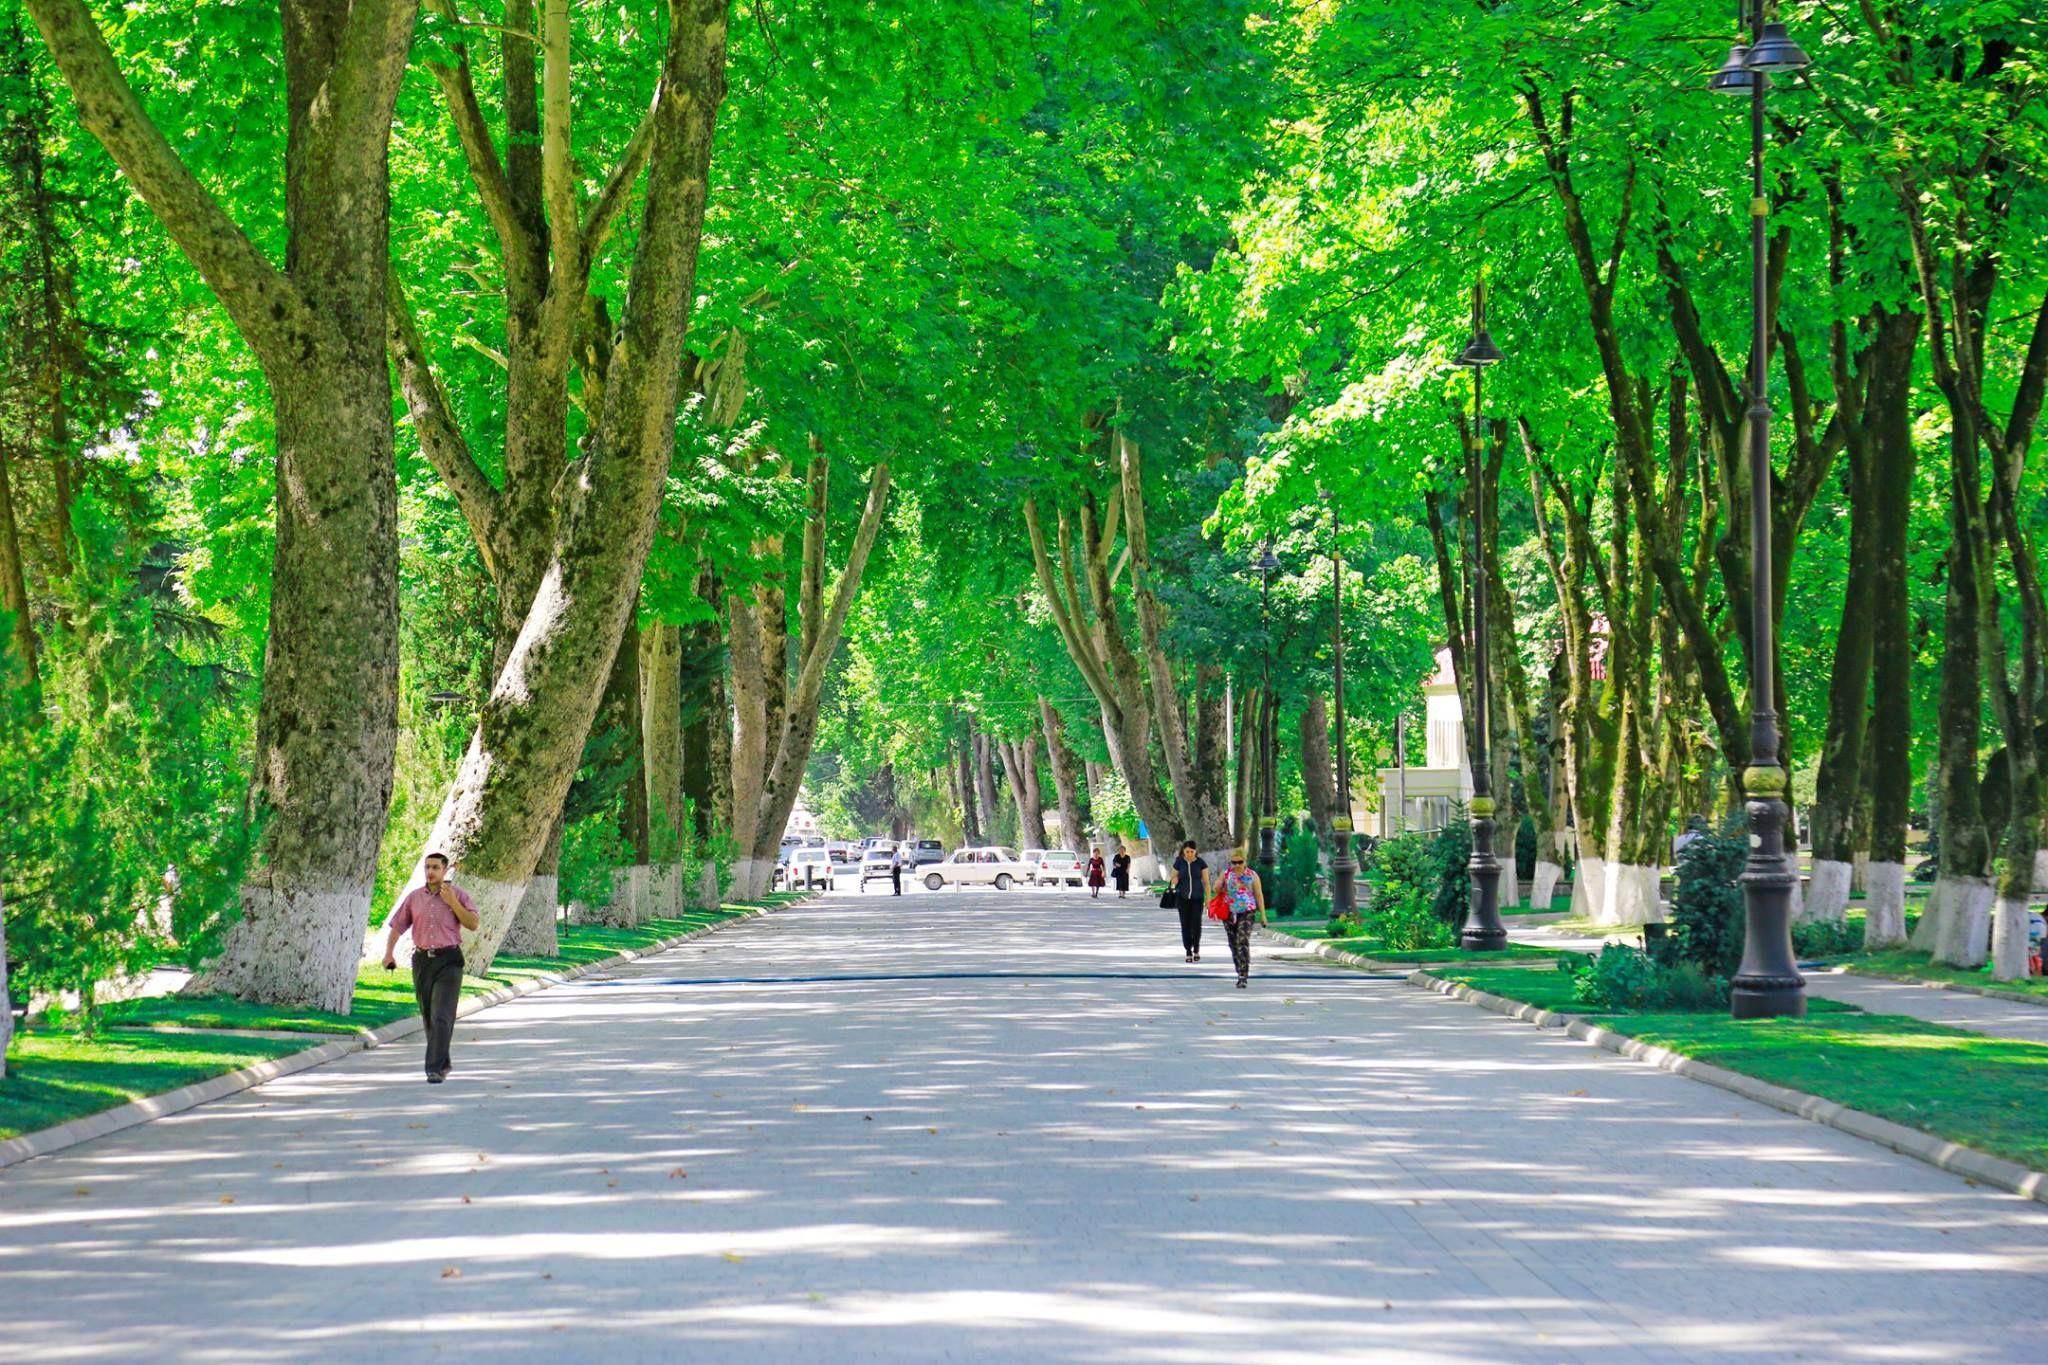 Environmental improvement plan developed by Tashkent administration